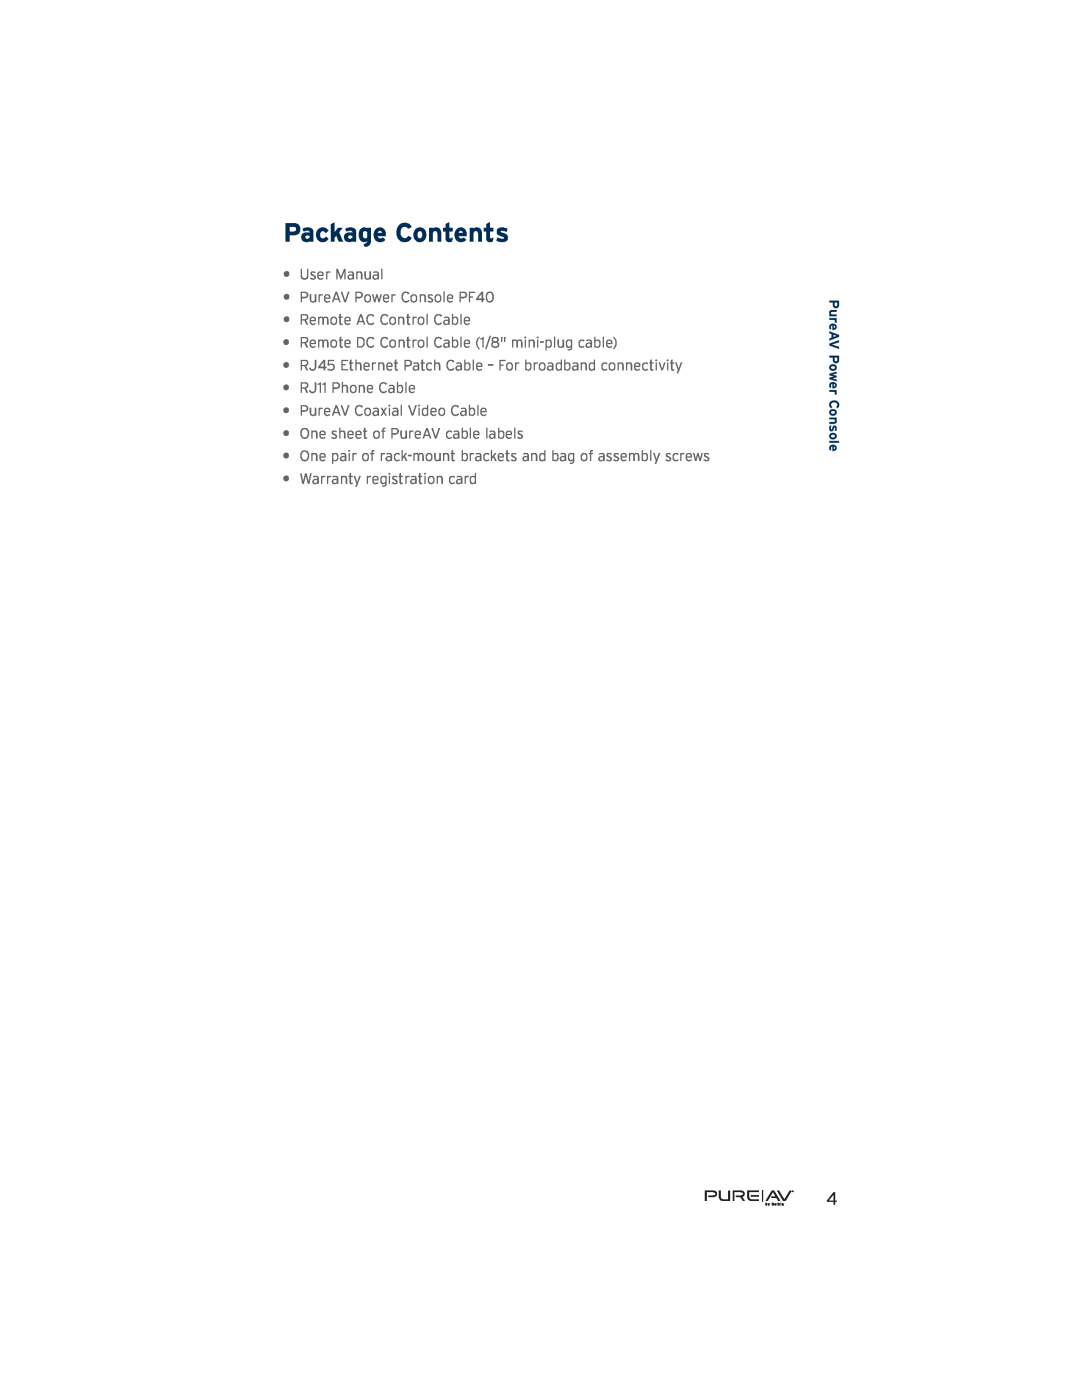 Belkin AP21300-12 user manual Package Contents, Remote AC Control Cable, Remote DC Control Cable 1/8 mini-plugcable 